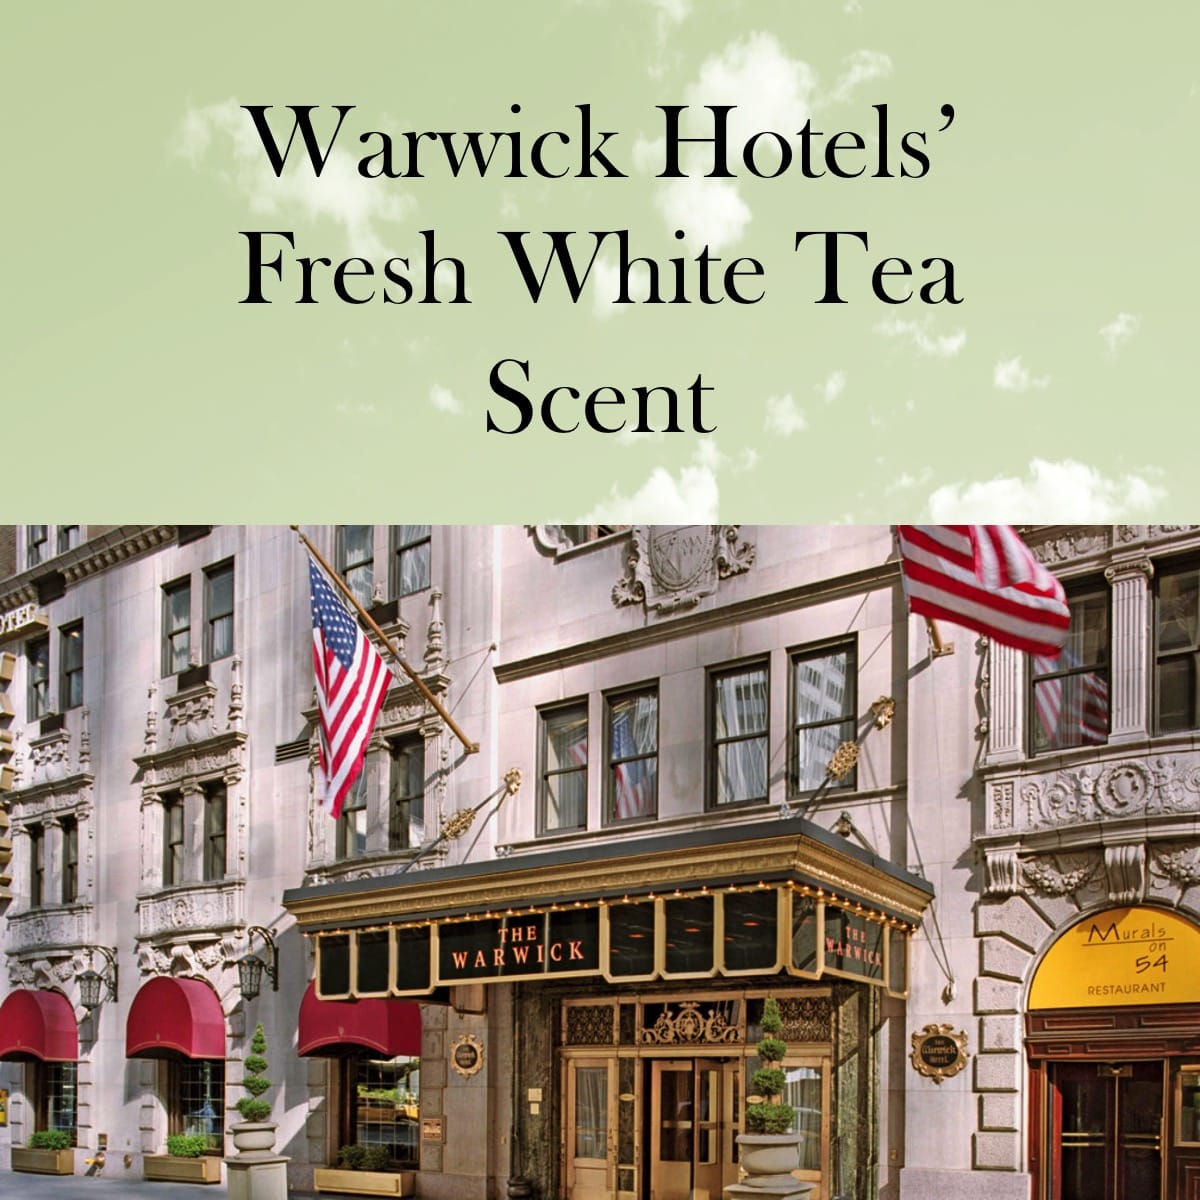 Warwick Hotels' Scent